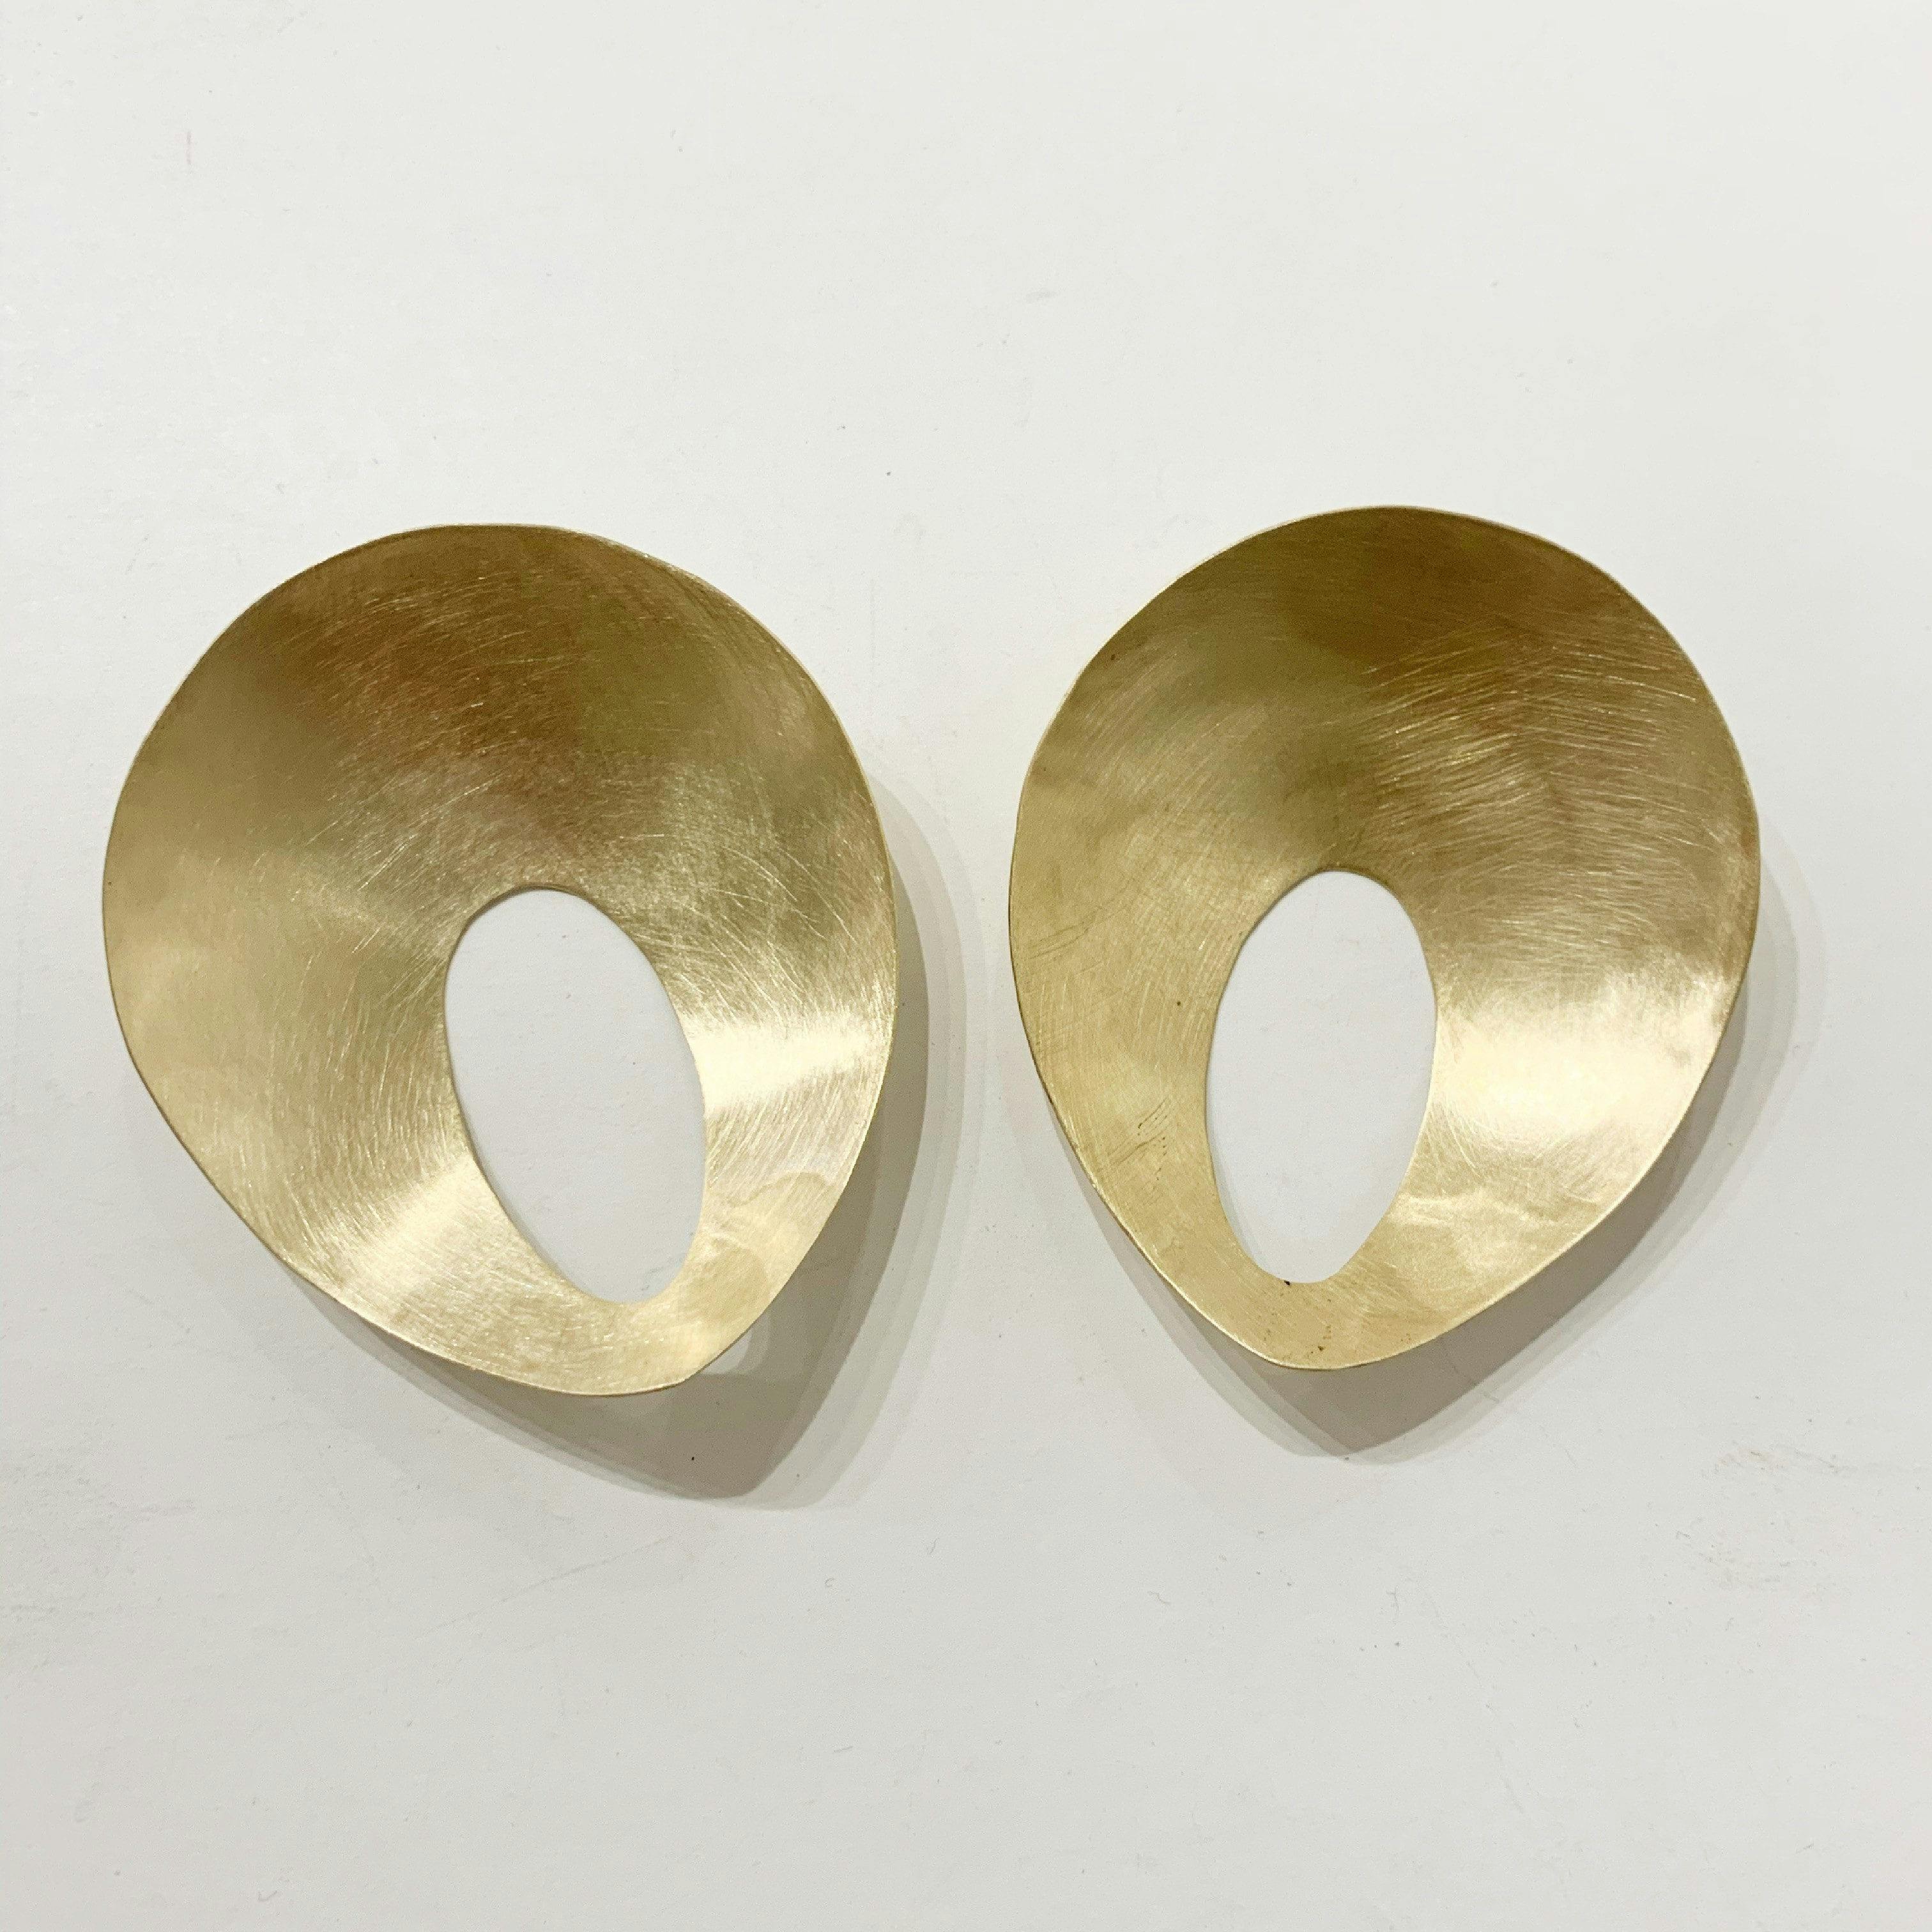 Artemis Shield Earrings in Oval, a product by Jenny Greco Jewellery